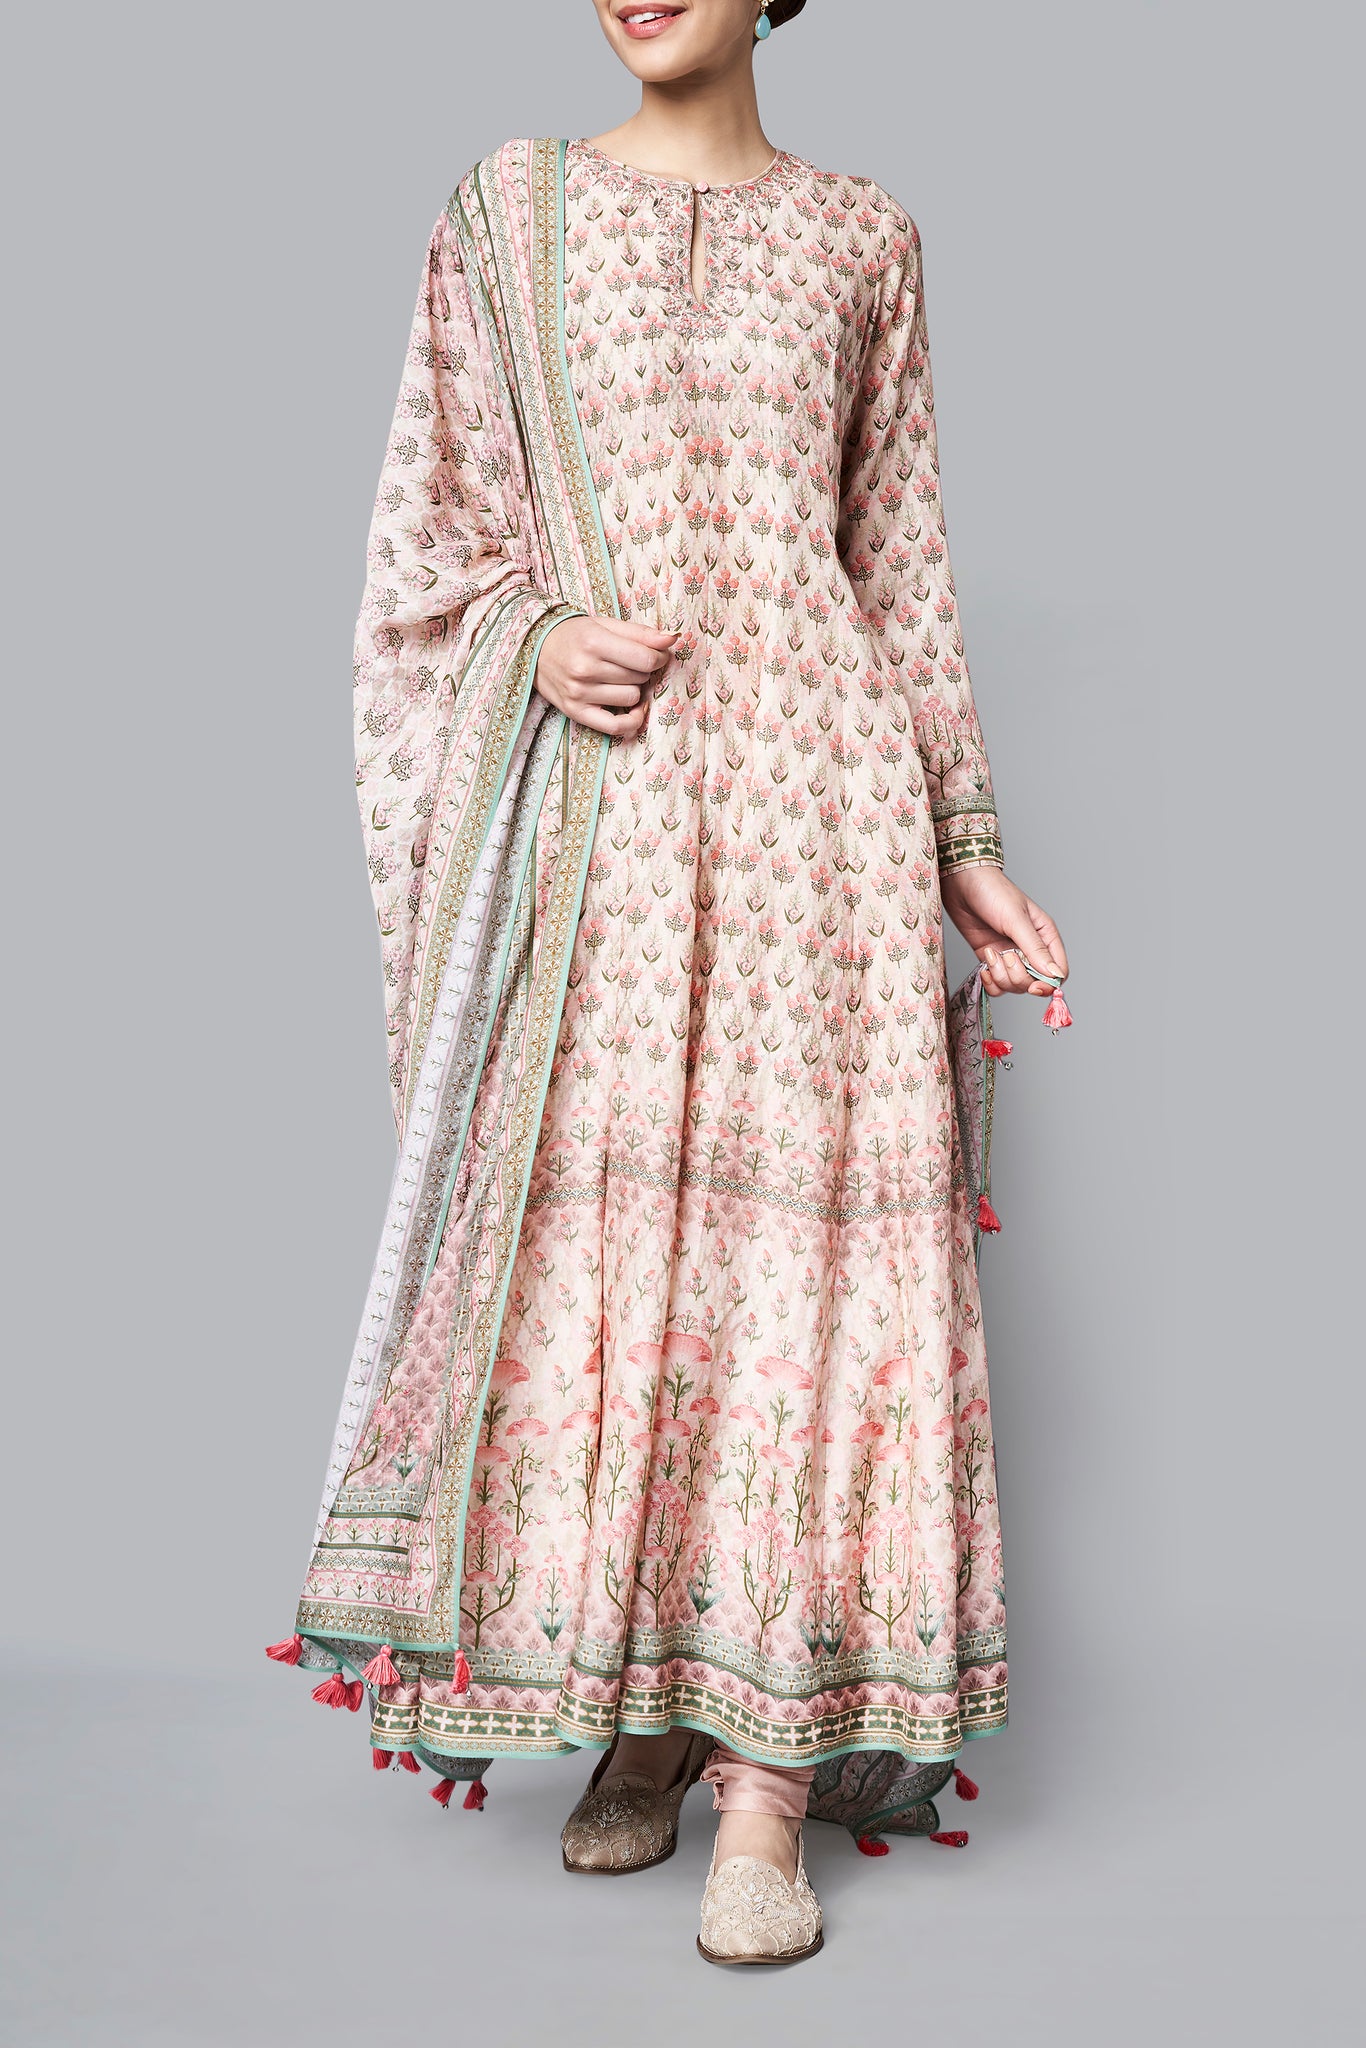 Madhuri Dixit In Anita Dongres Designer Floor Length Anarkali Suit